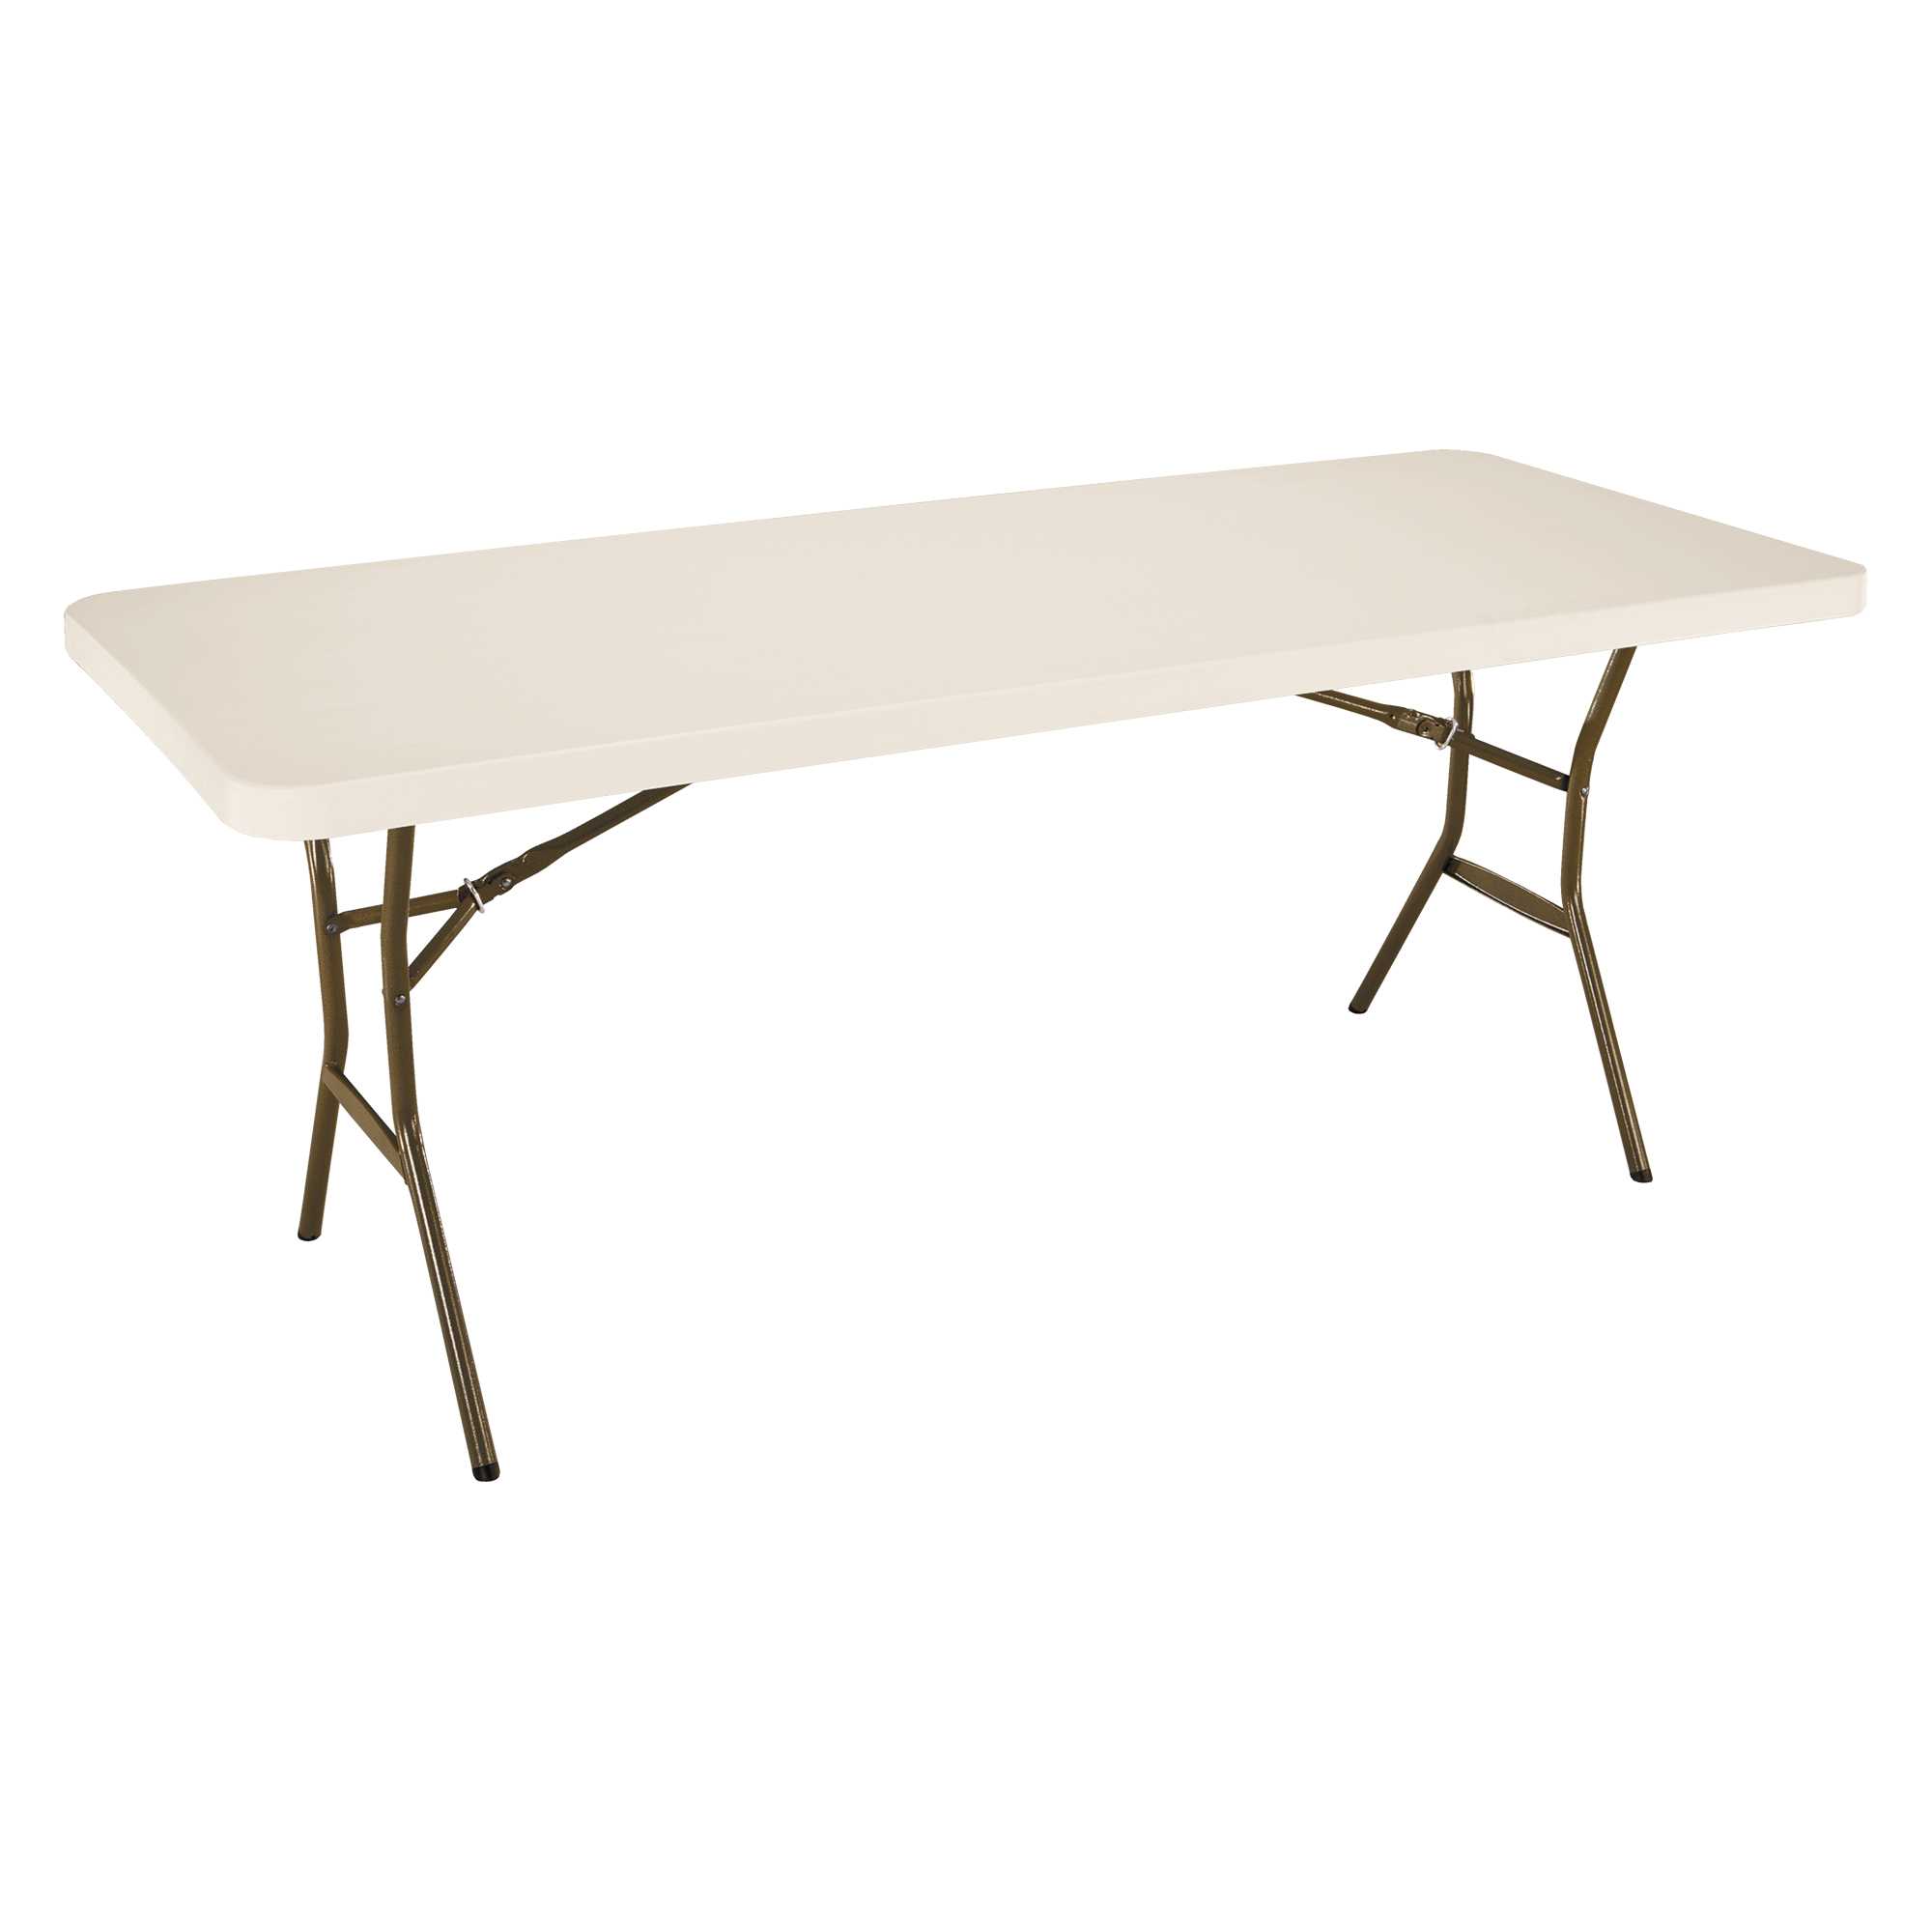 Rectangular table 183cm 80524